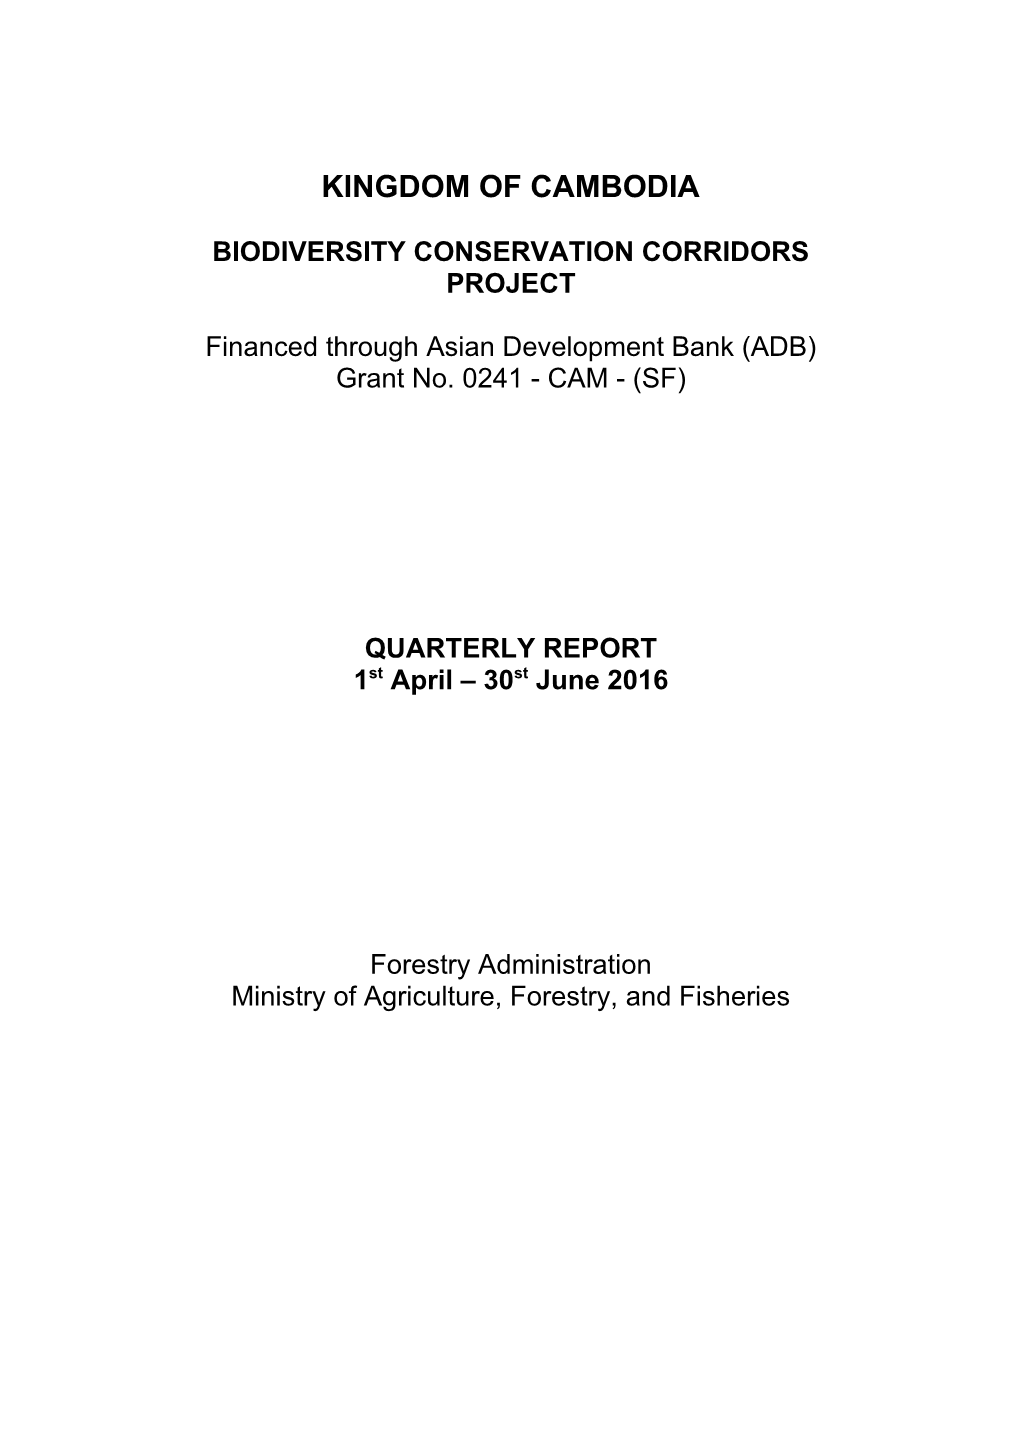 Biodiversity Conservation Corridors Project